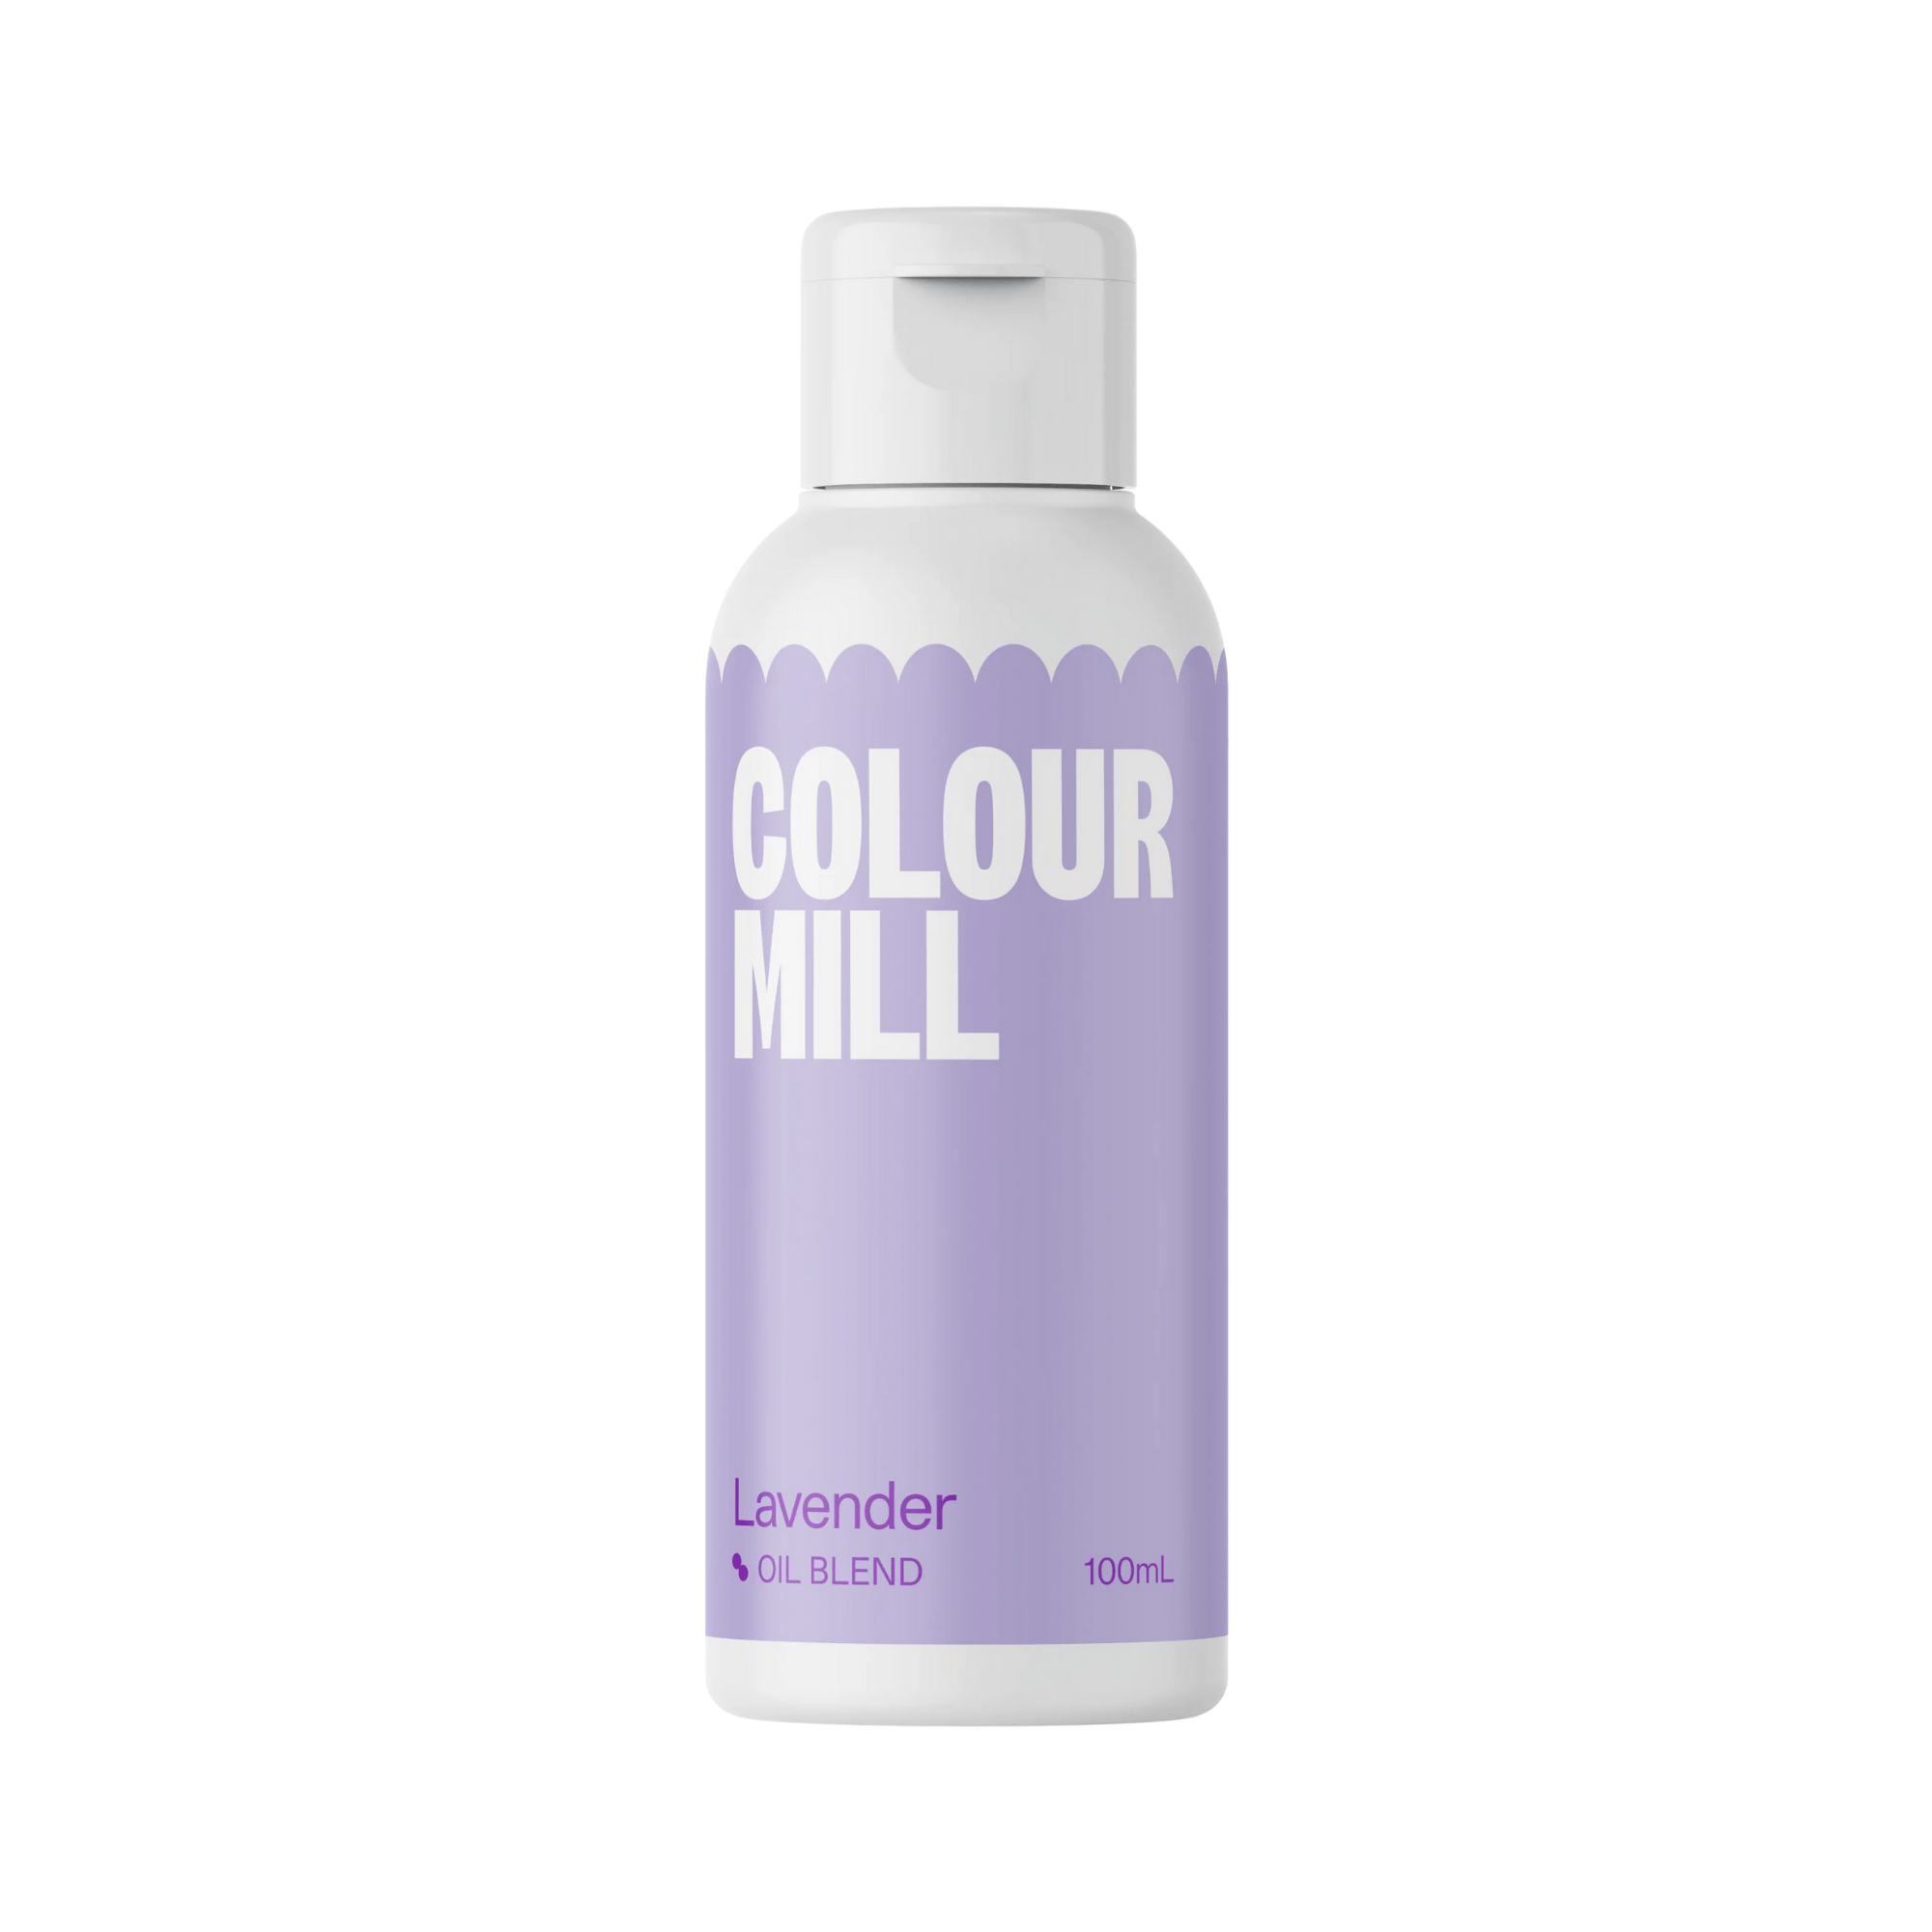 Happy Sprinkles Streusel 100ml Colour Mill Lavender - Oil Blend